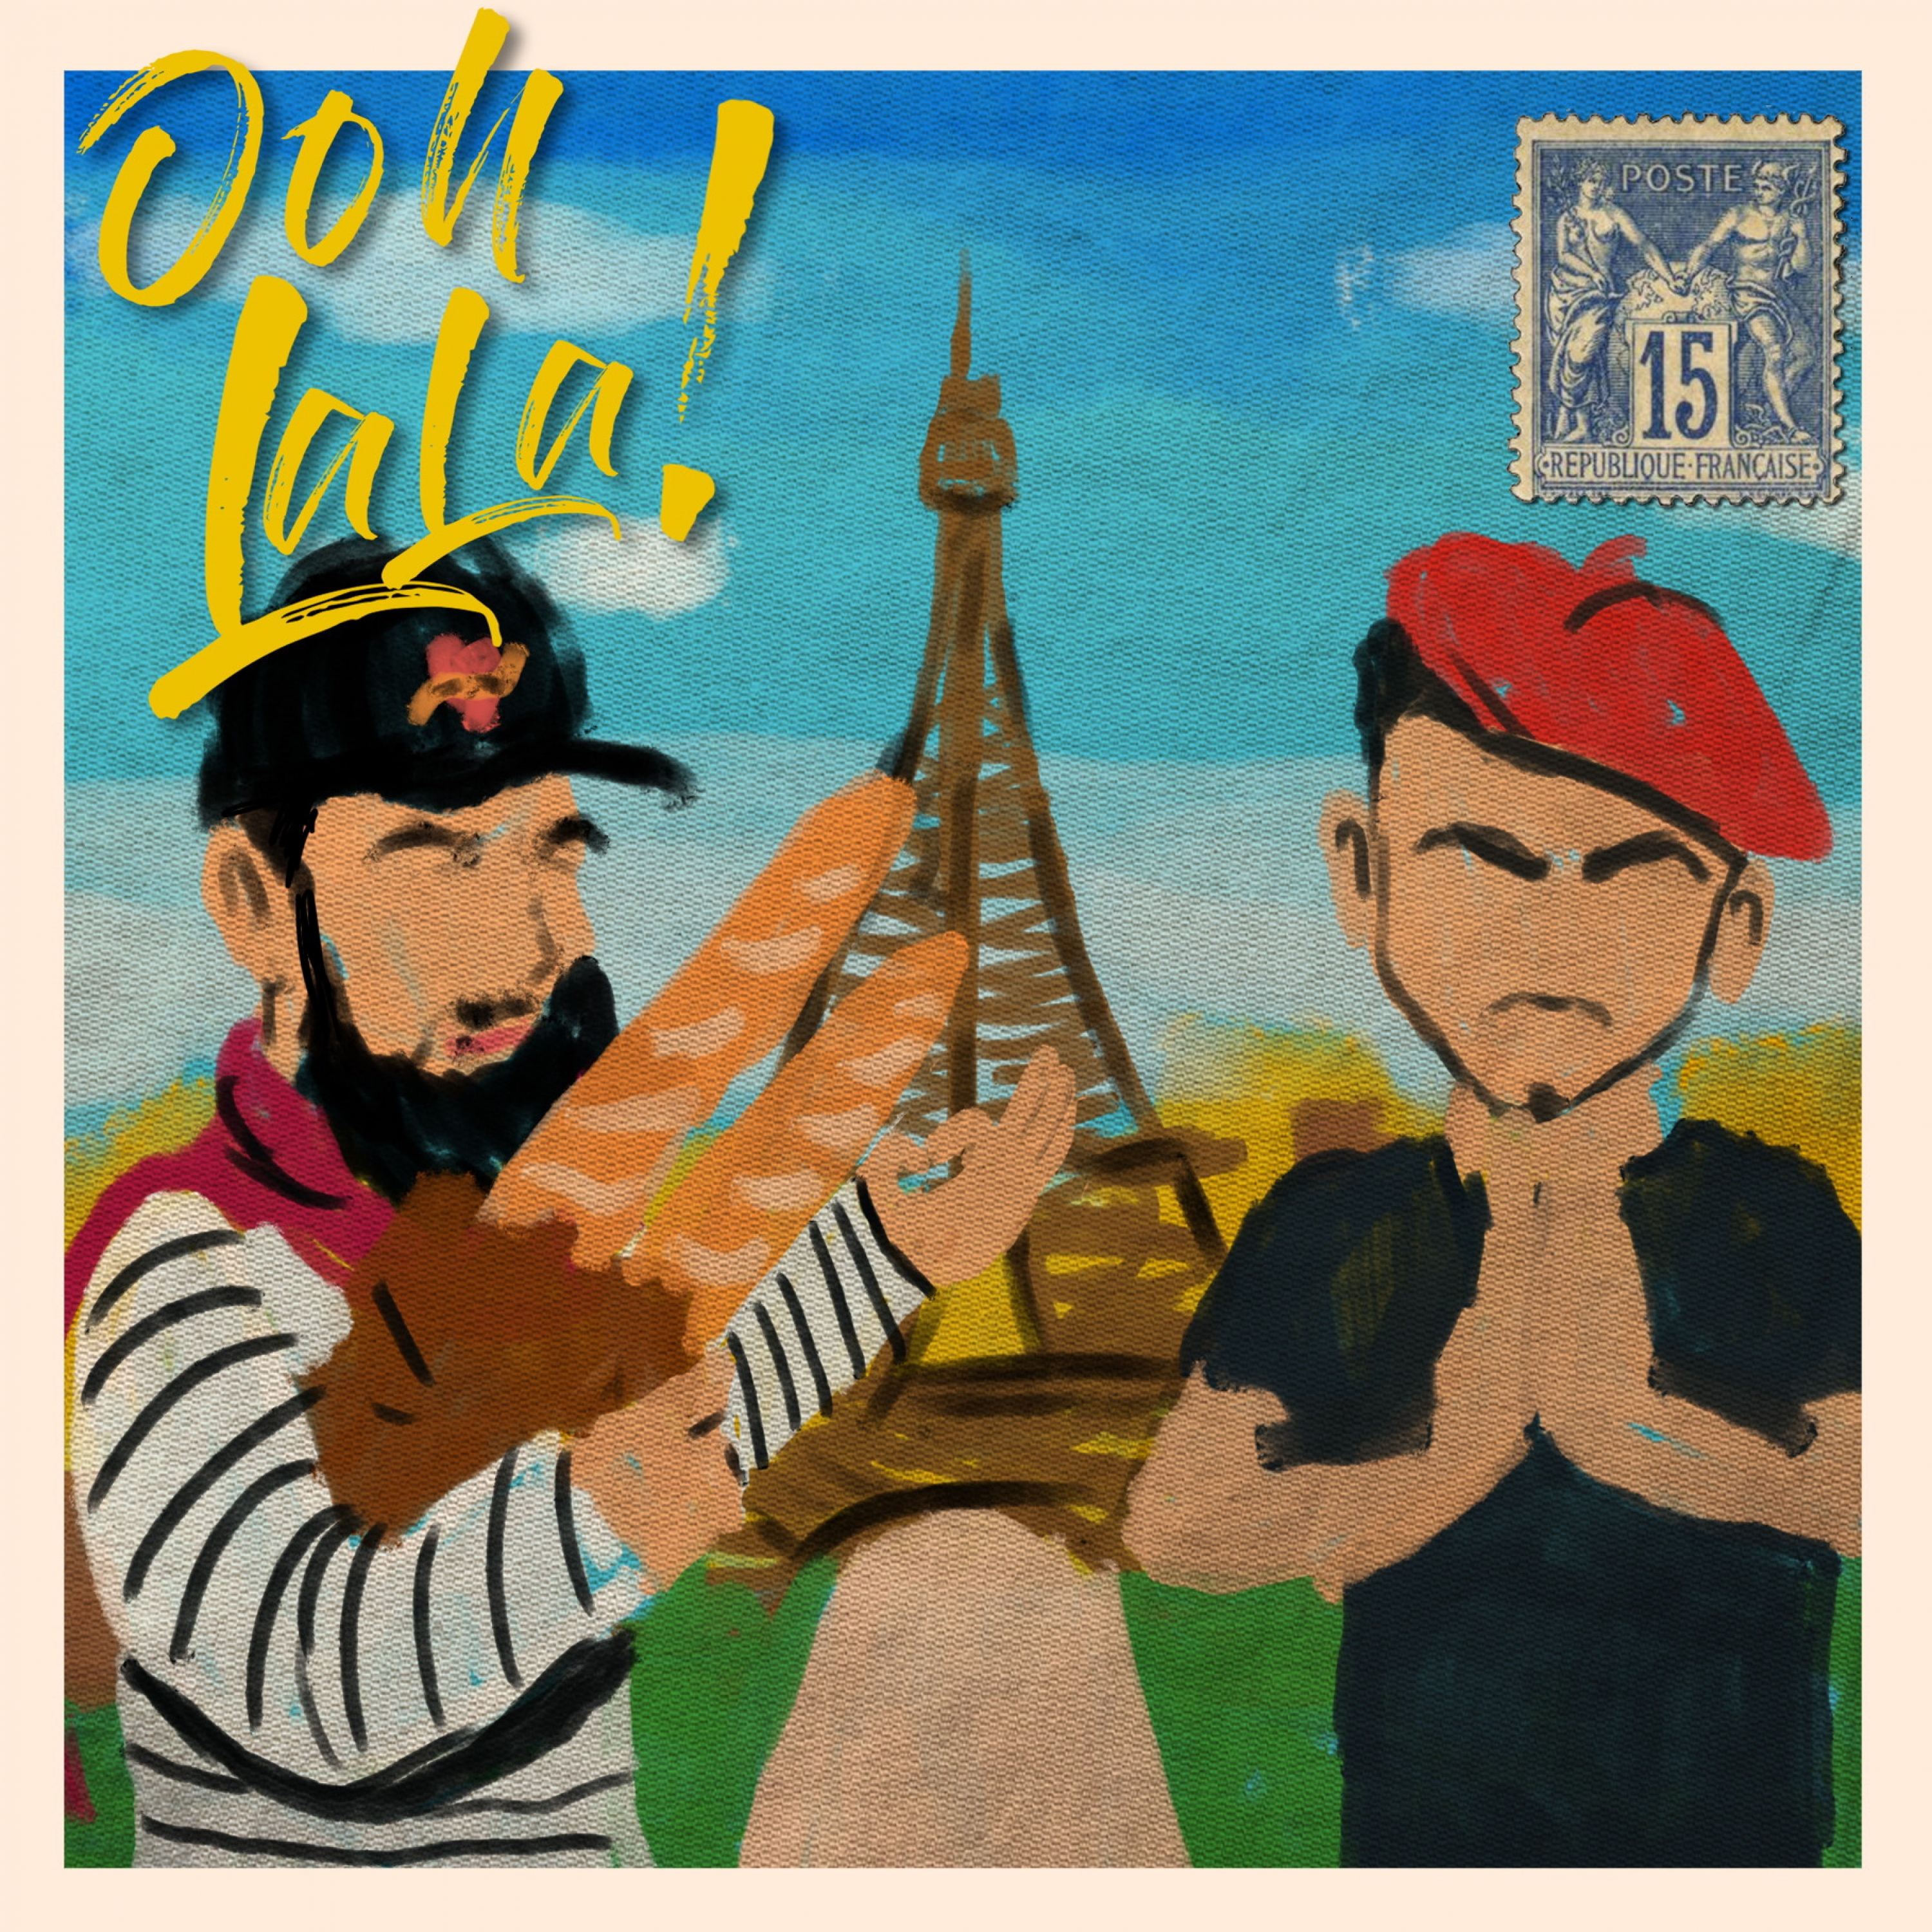 Ooh Lala (feat. Ramilou)